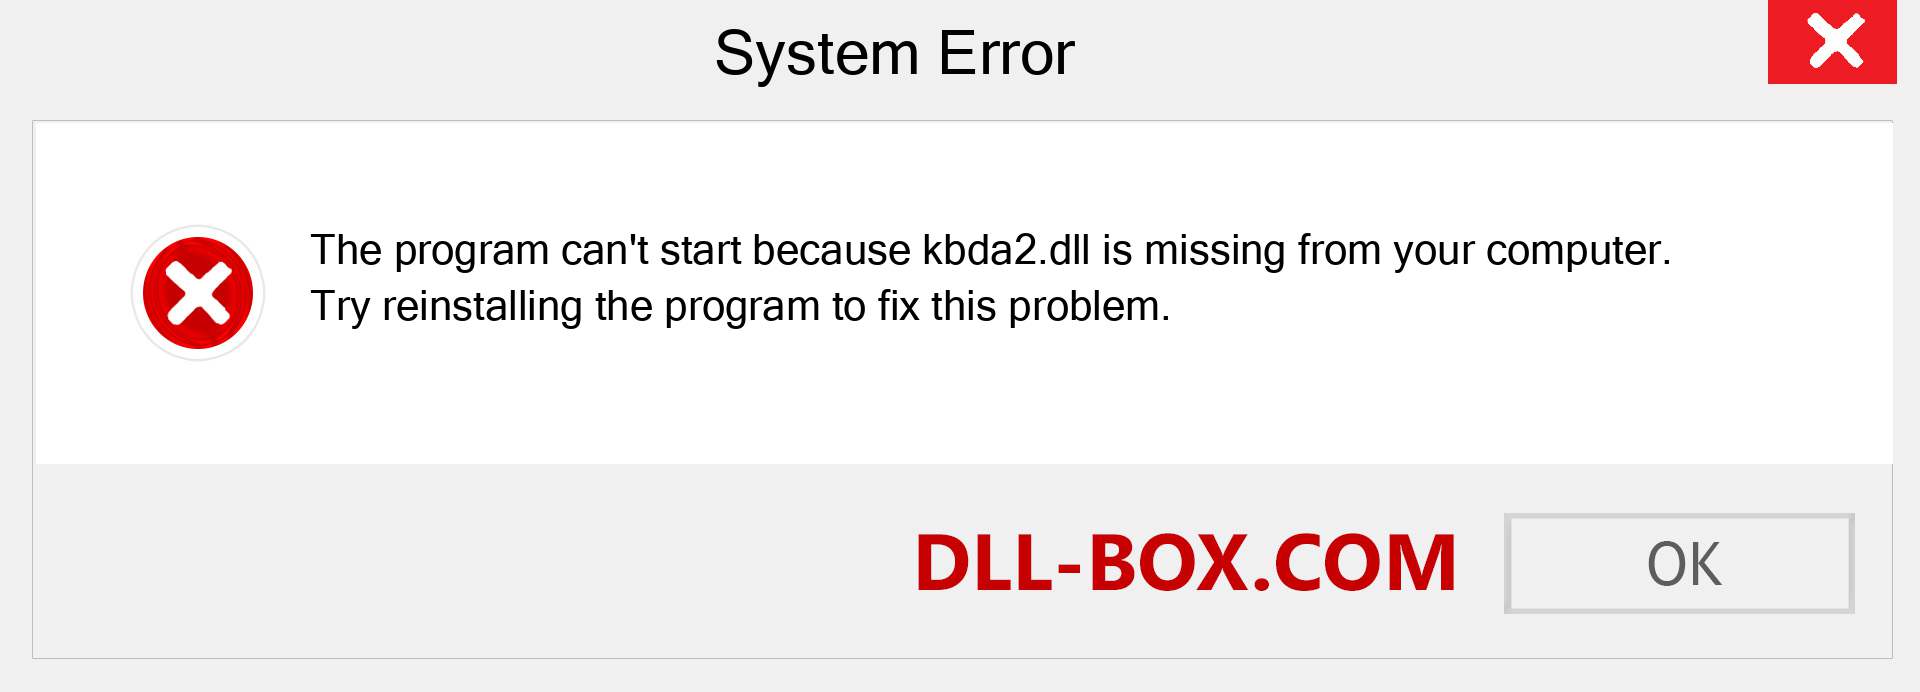  kbda2.dll file is missing?. Download for Windows 7, 8, 10 - Fix  kbda2 dll Missing Error on Windows, photos, images